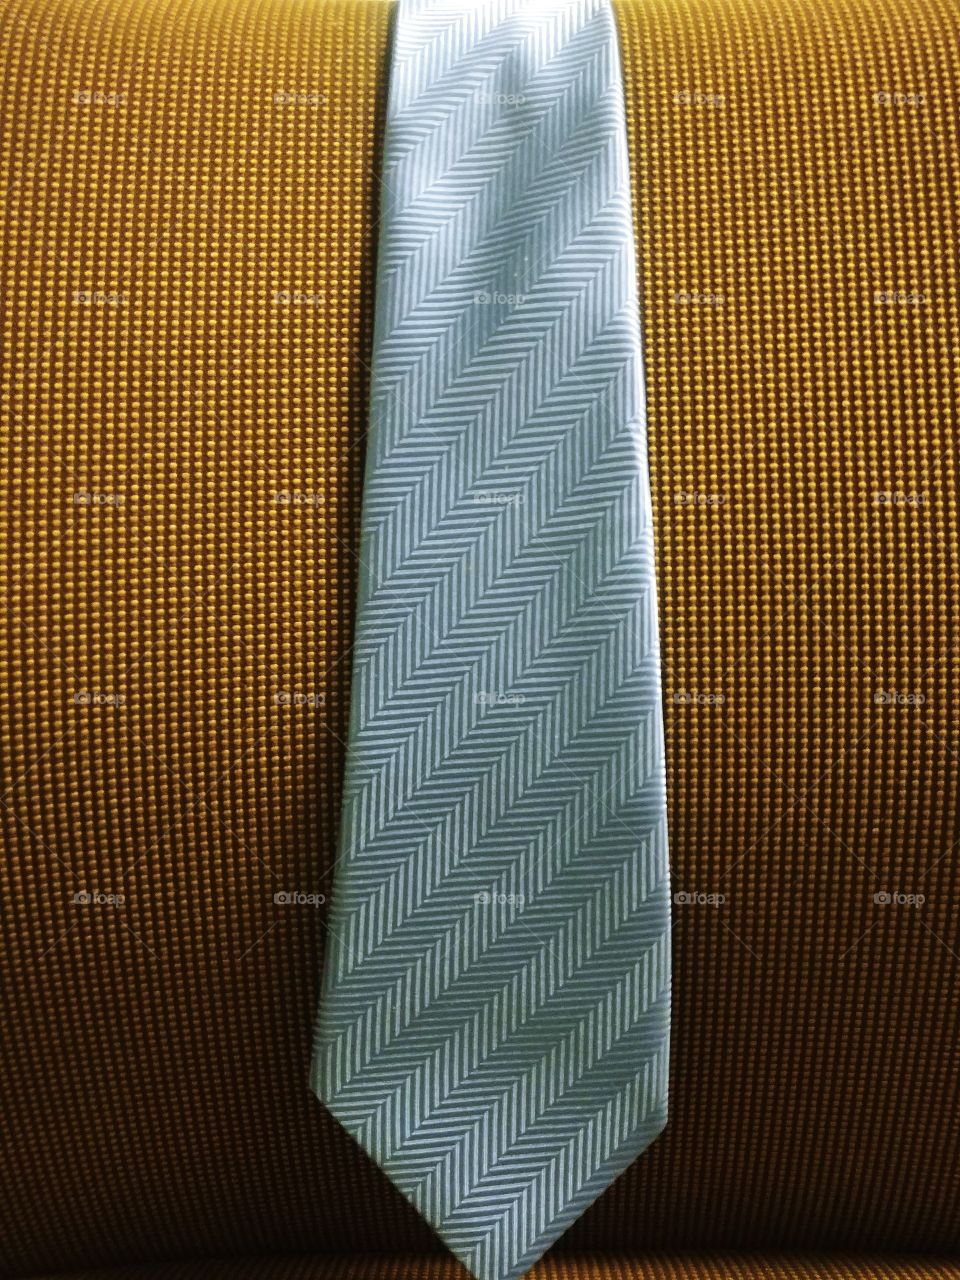 Tie pattern